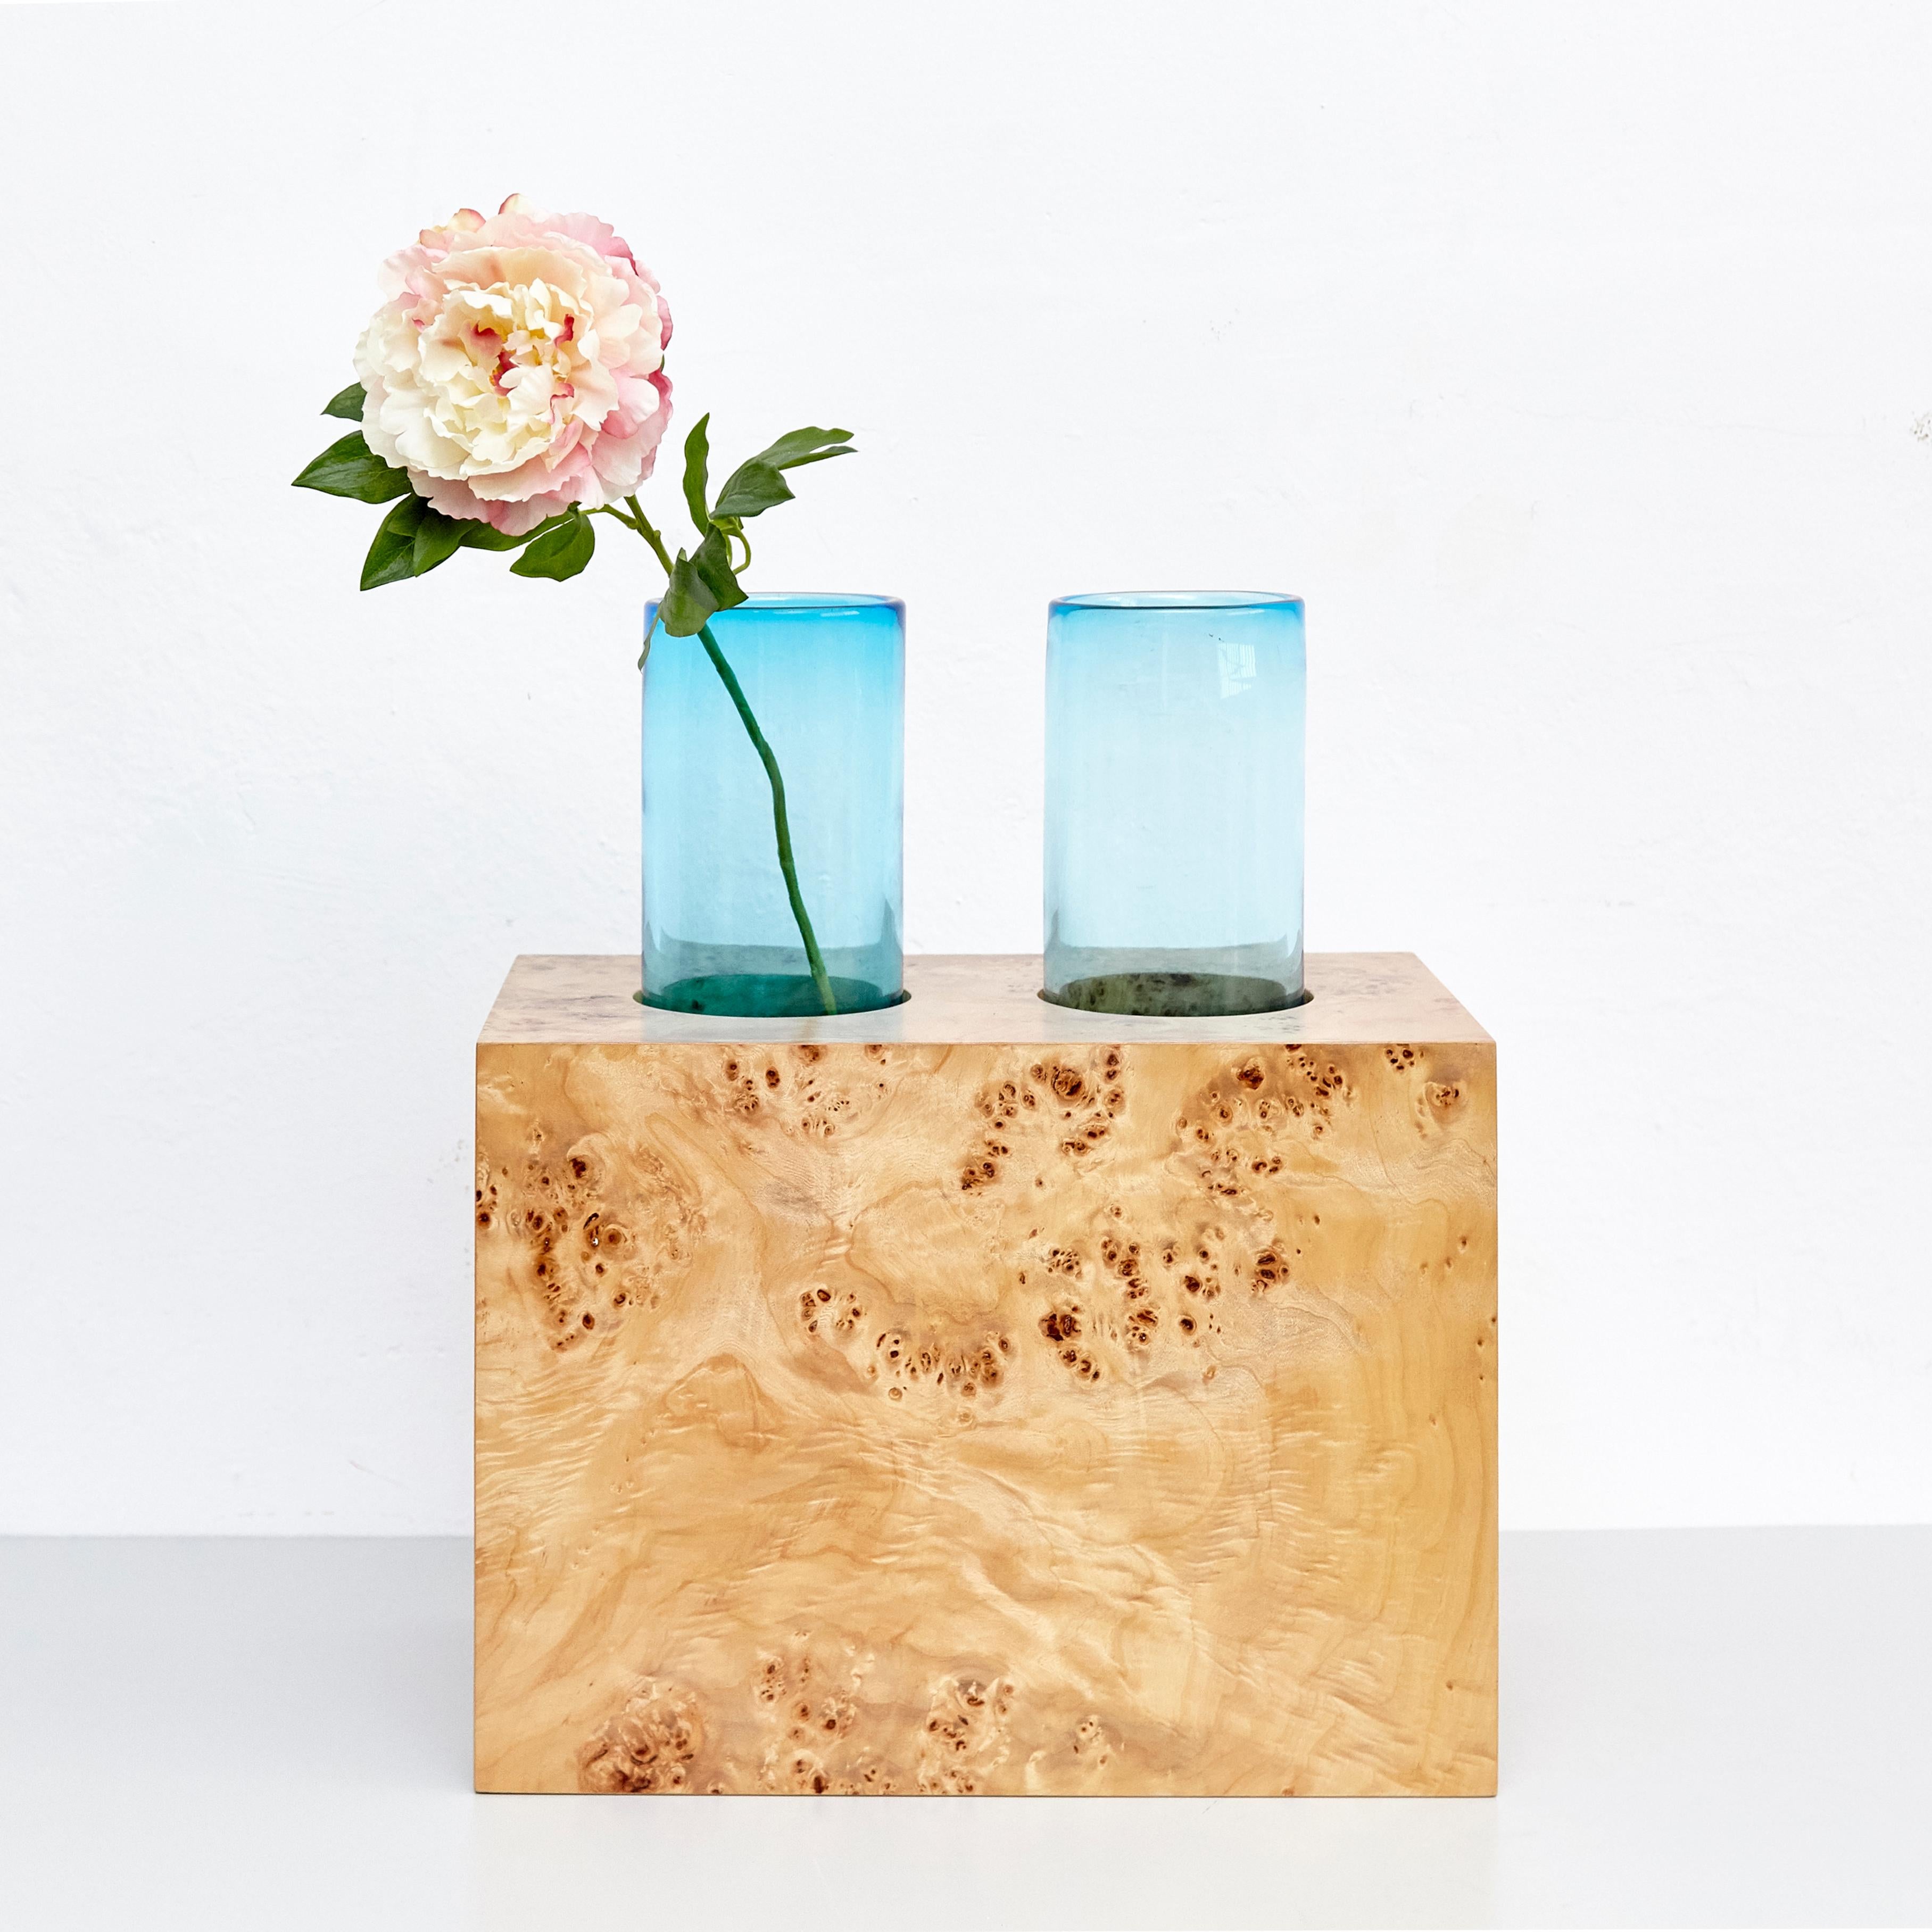 Ettore Sottsass Twenty-Seven Woods for a Chinese Artificial Flower Vase E 1